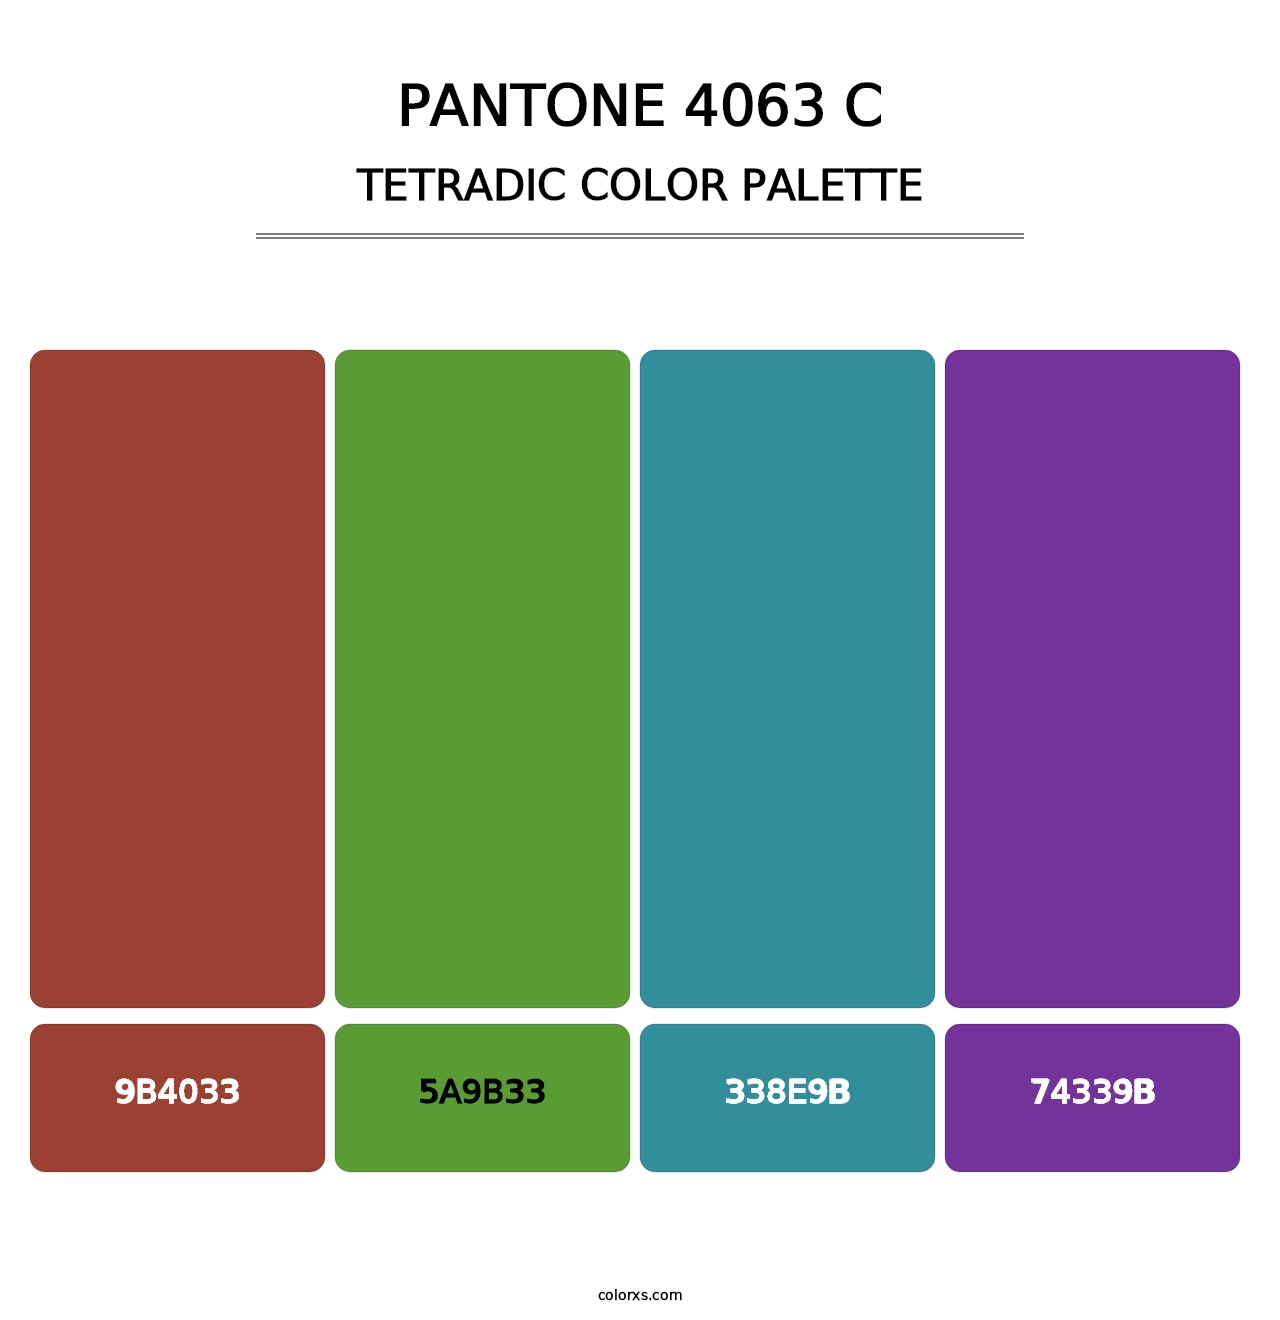 PANTONE 4063 C - Tetradic Color Palette